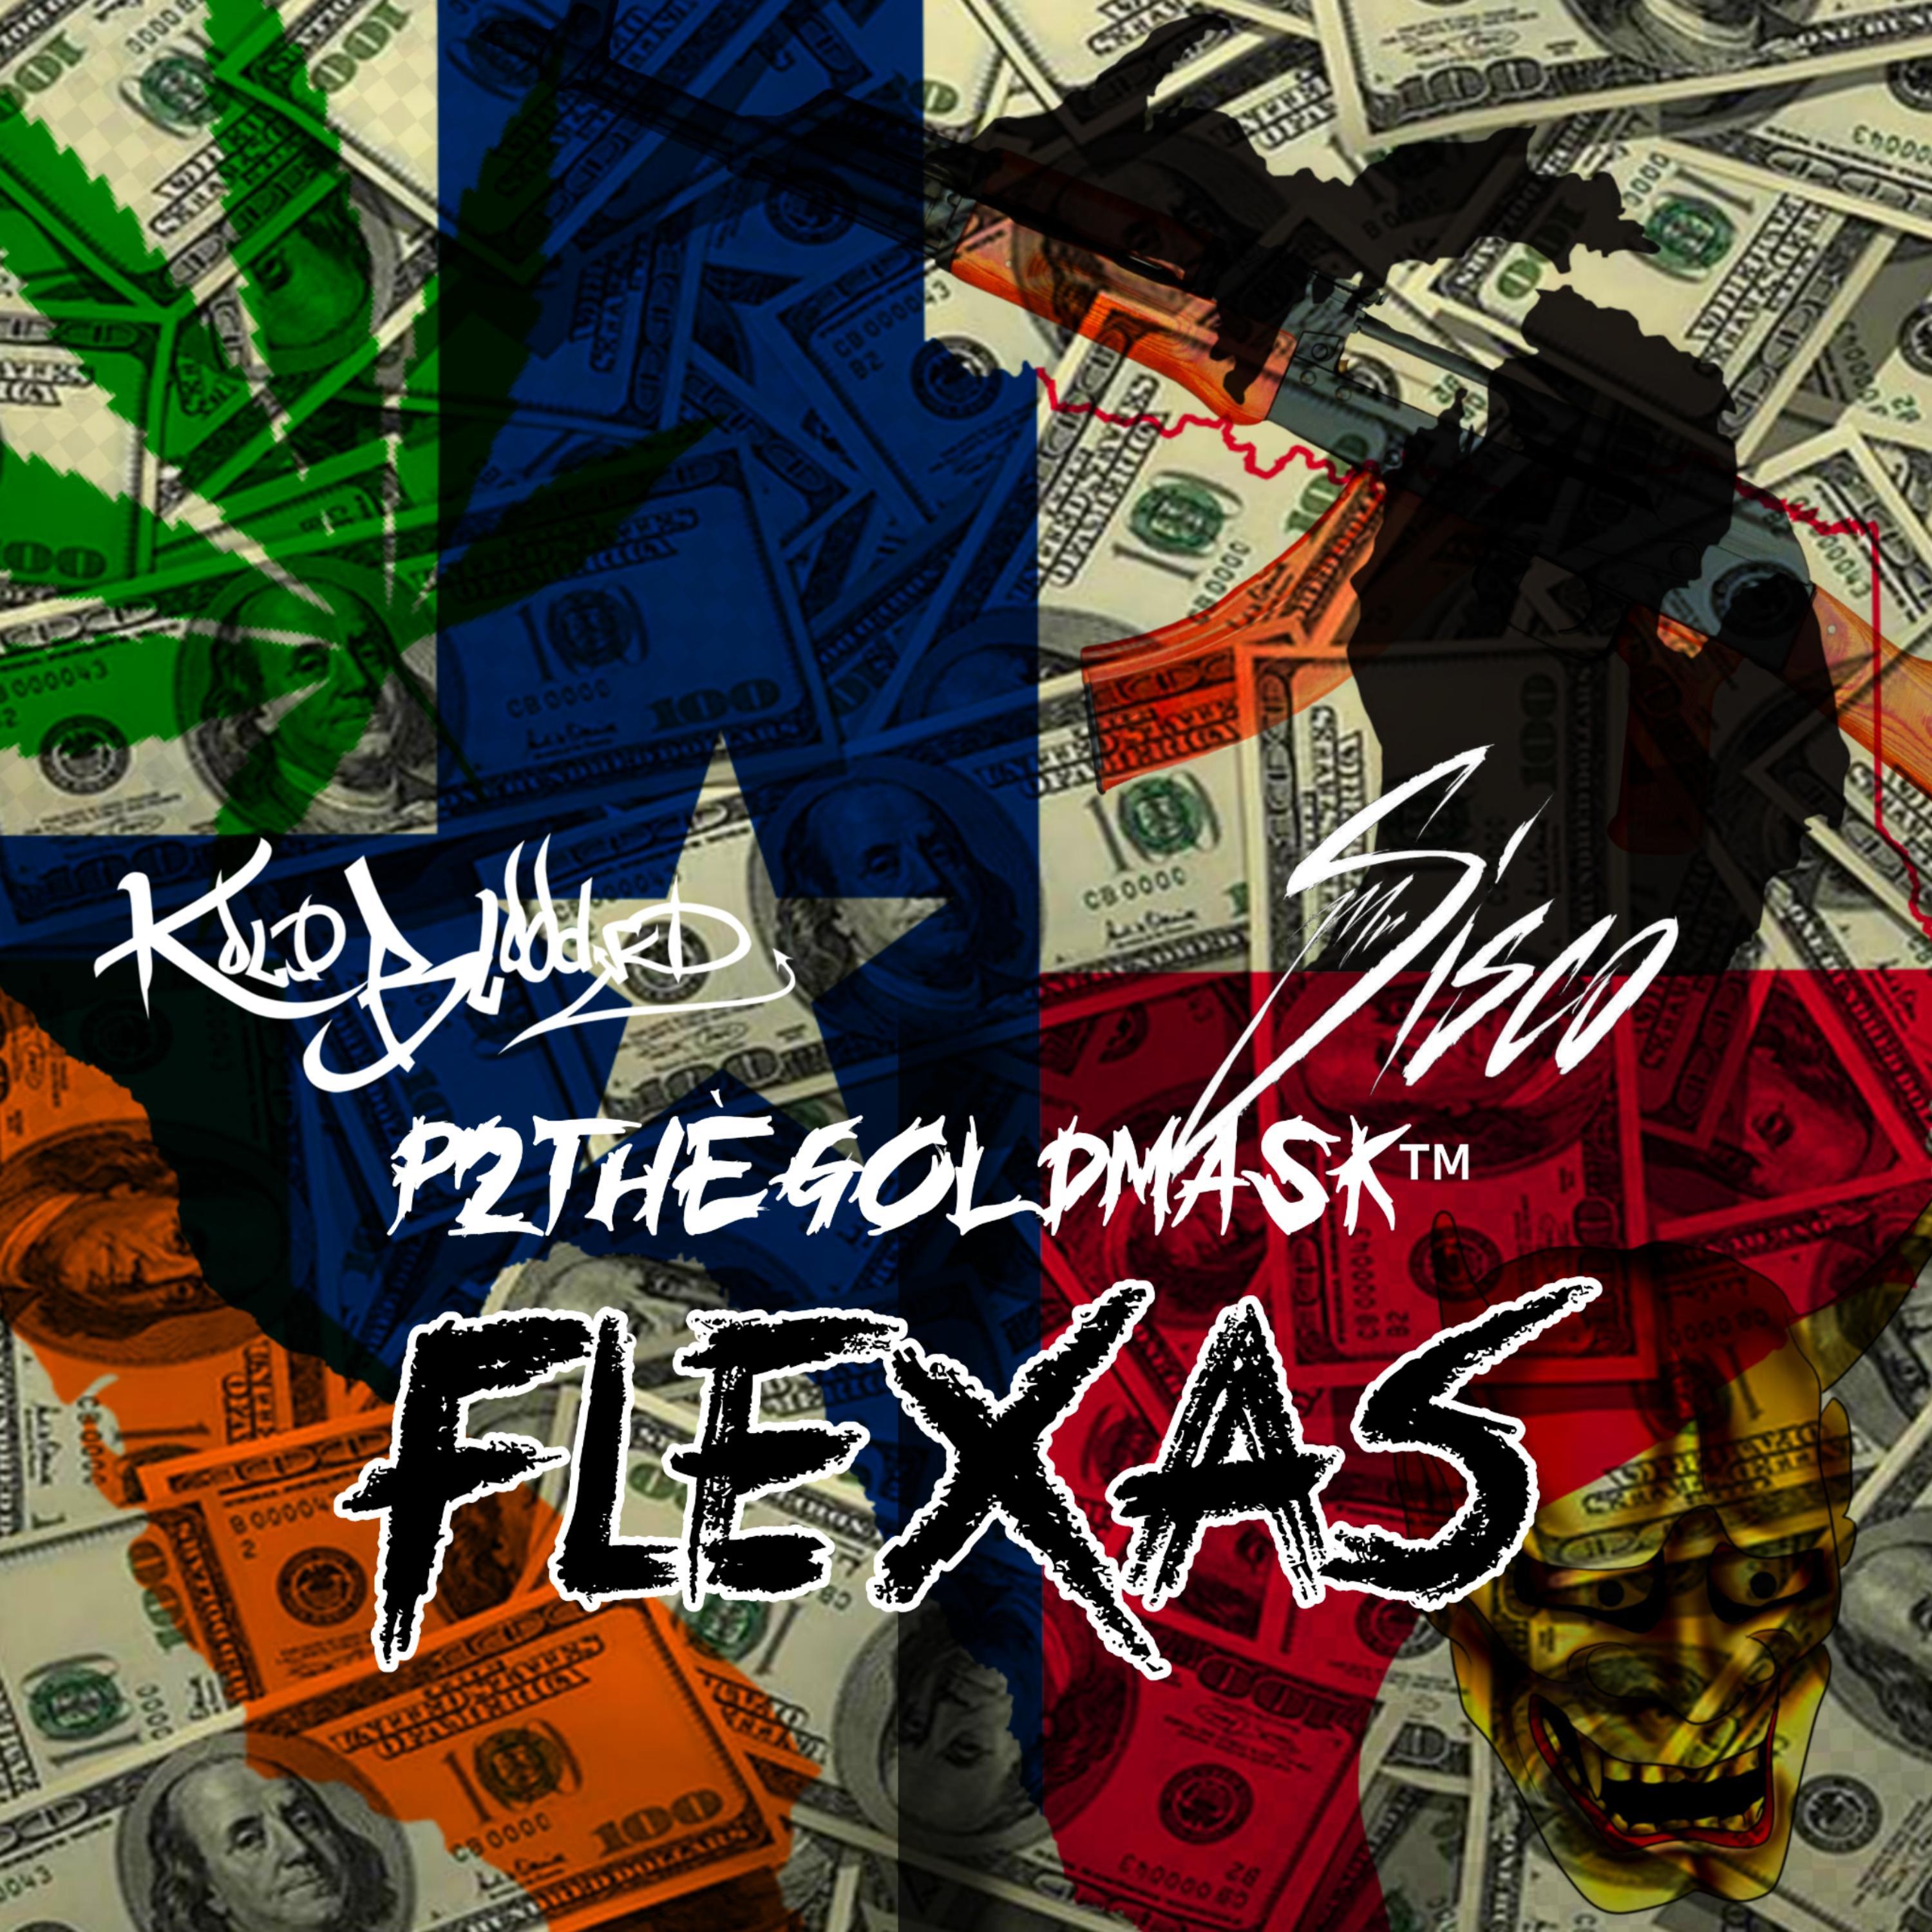 Kold-Blooded - FLEXAS (feat. P2thegoldmask)